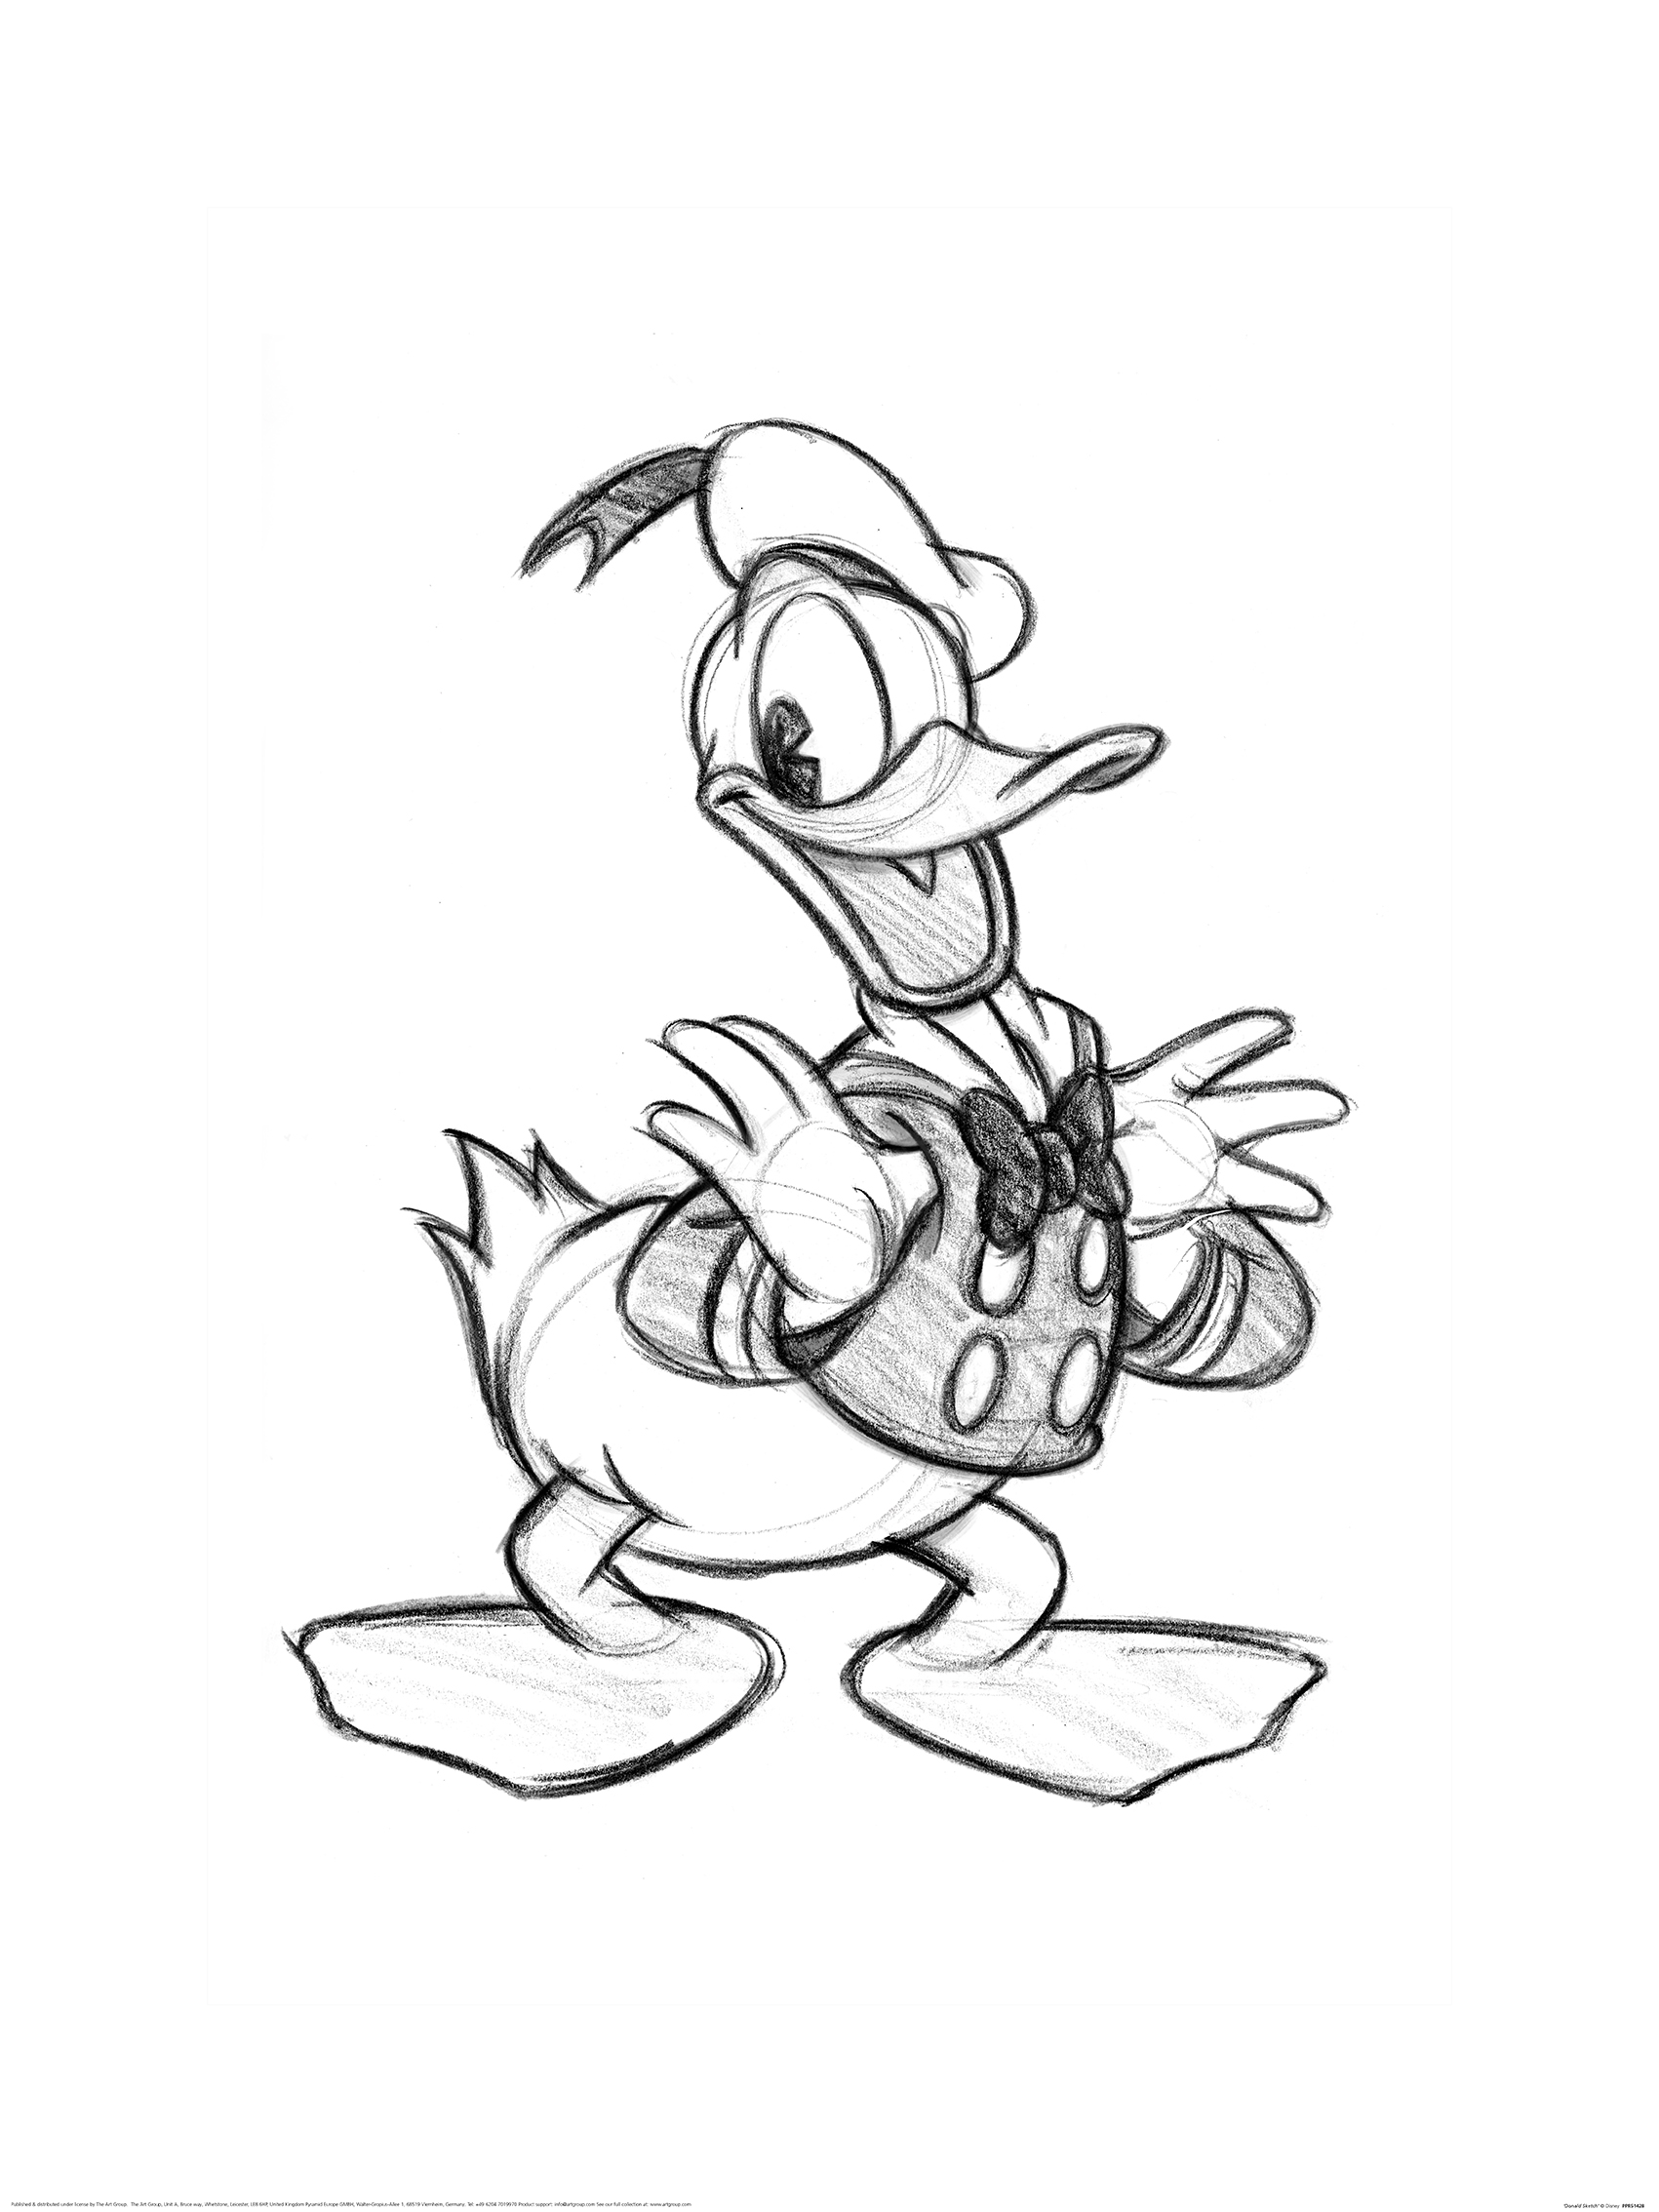 Donald Duck (Sketch) Art Prints